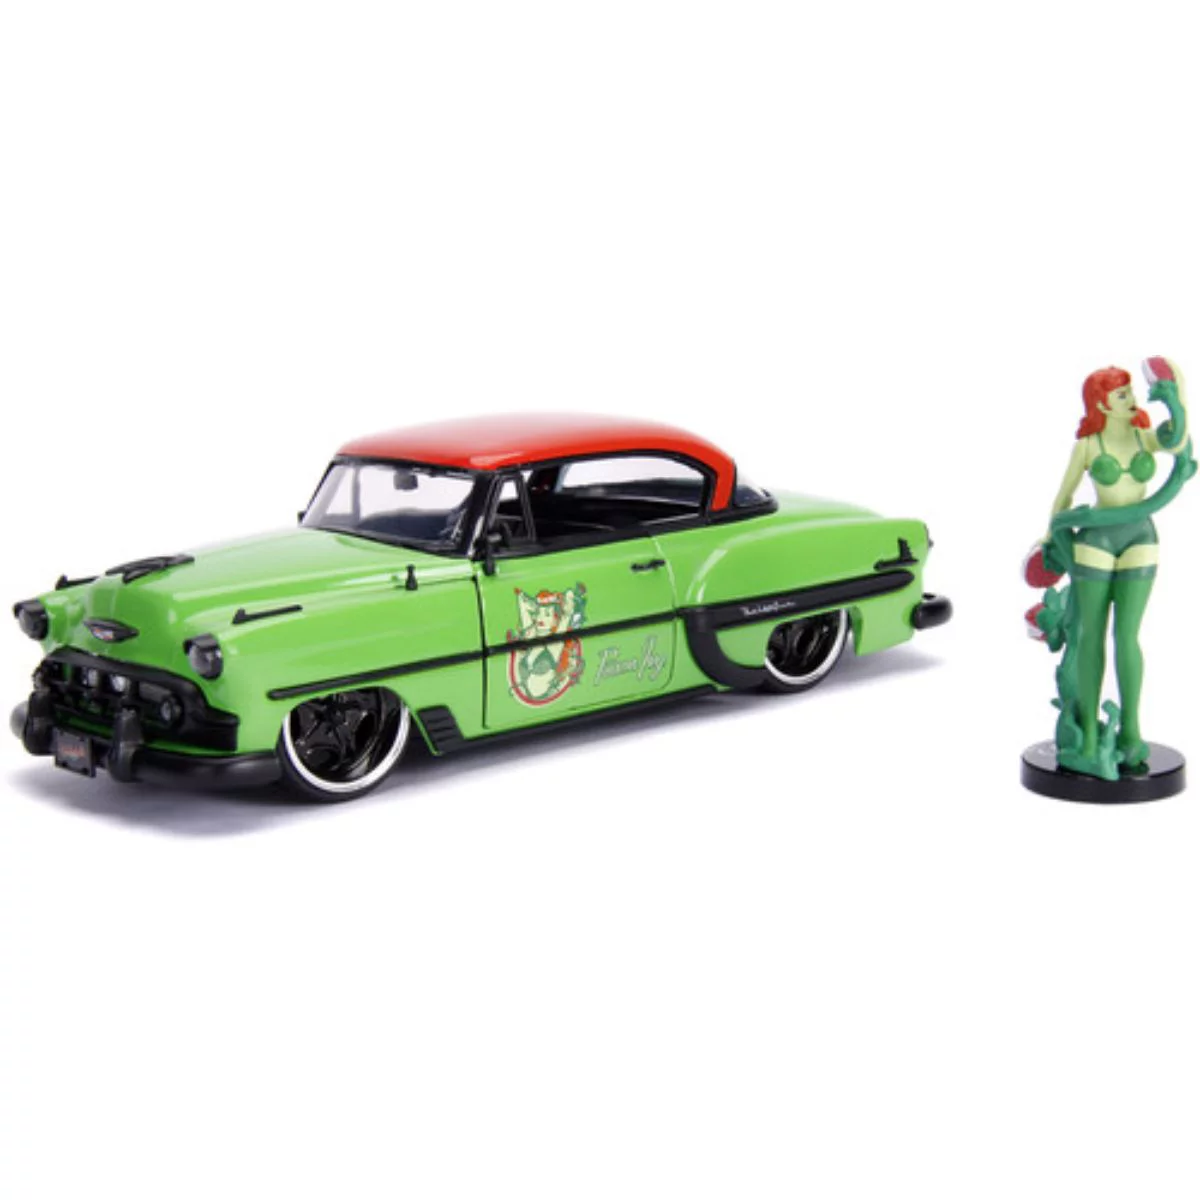 Jada-Toys-DC-Comics-Bombshells-Poison-Ivy-1953-Chevy-Bel-Air-Die-cast-Car-1-24-Scale-Vehicle-2-75-Collectible-Figurine-Play-Vehicle_27984bc5-eedd-42b1-af5c-b1ae2d4b748d.fdd3cd4c